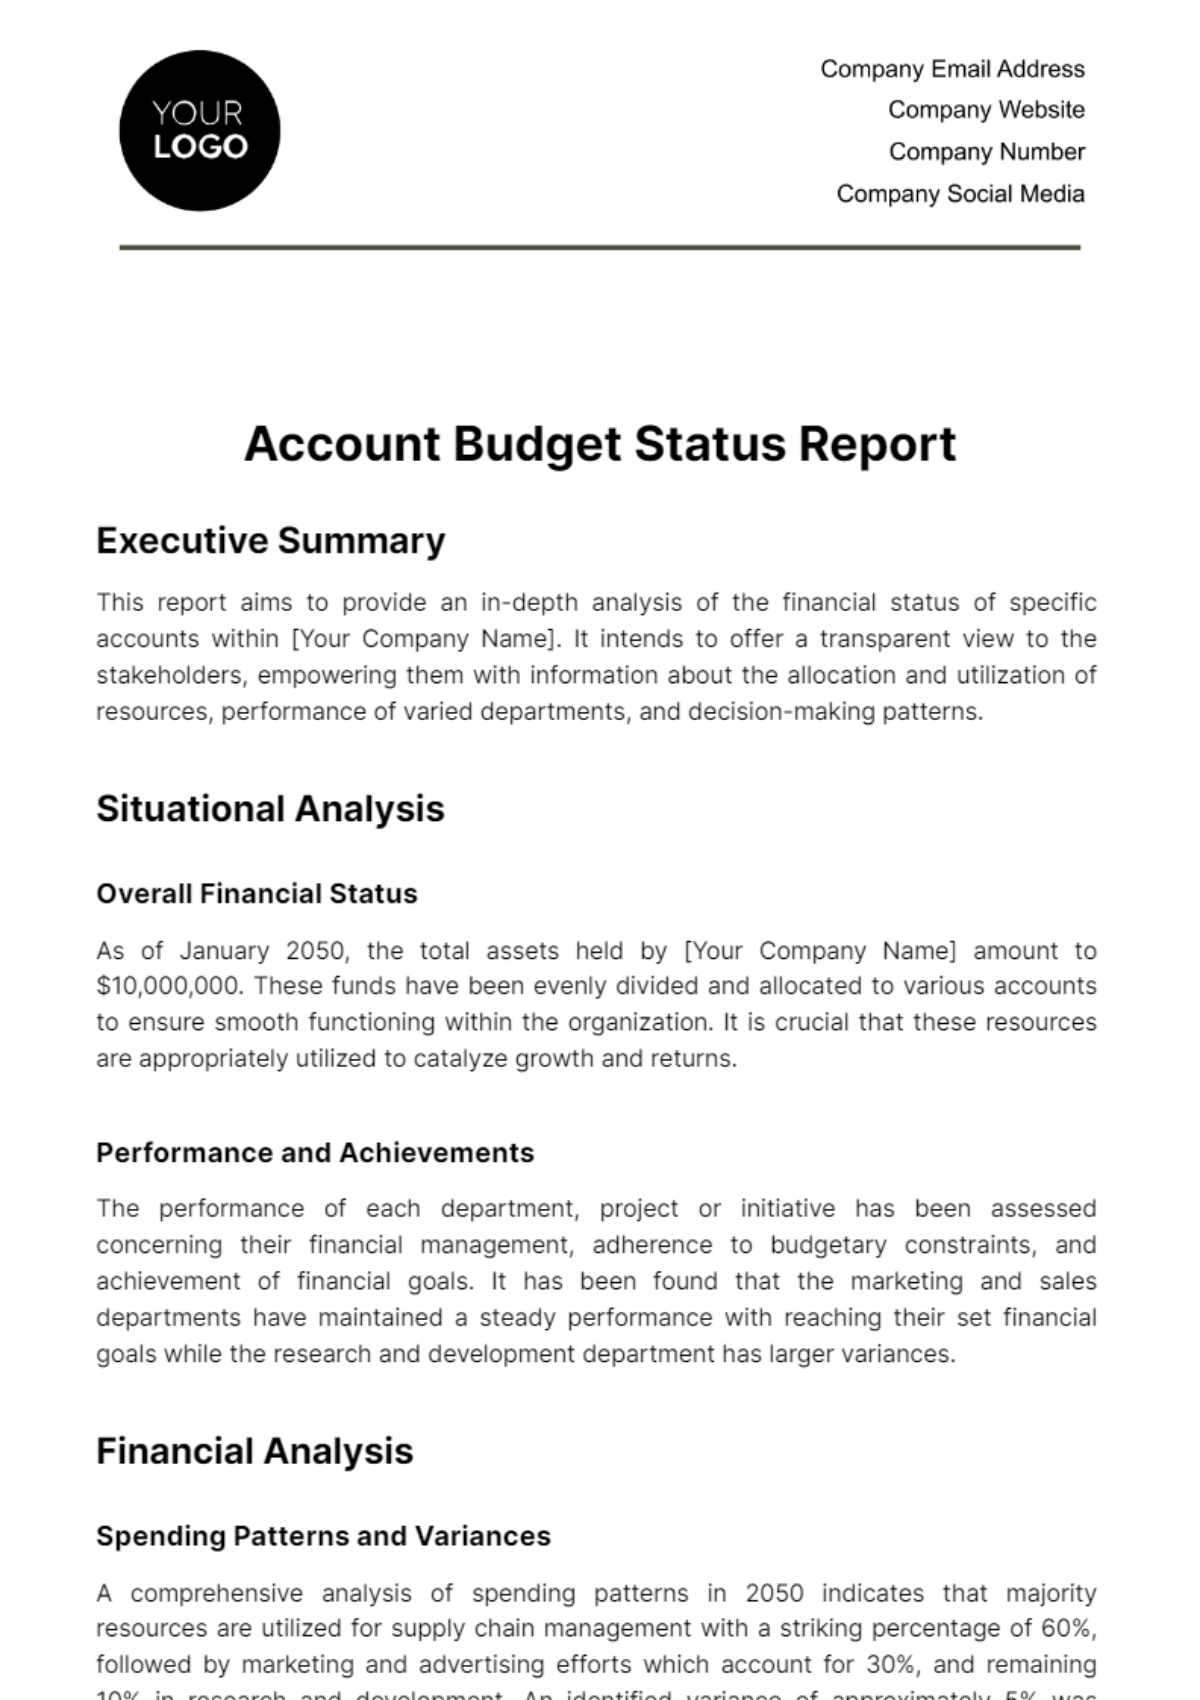 Account Budget Status Report Template